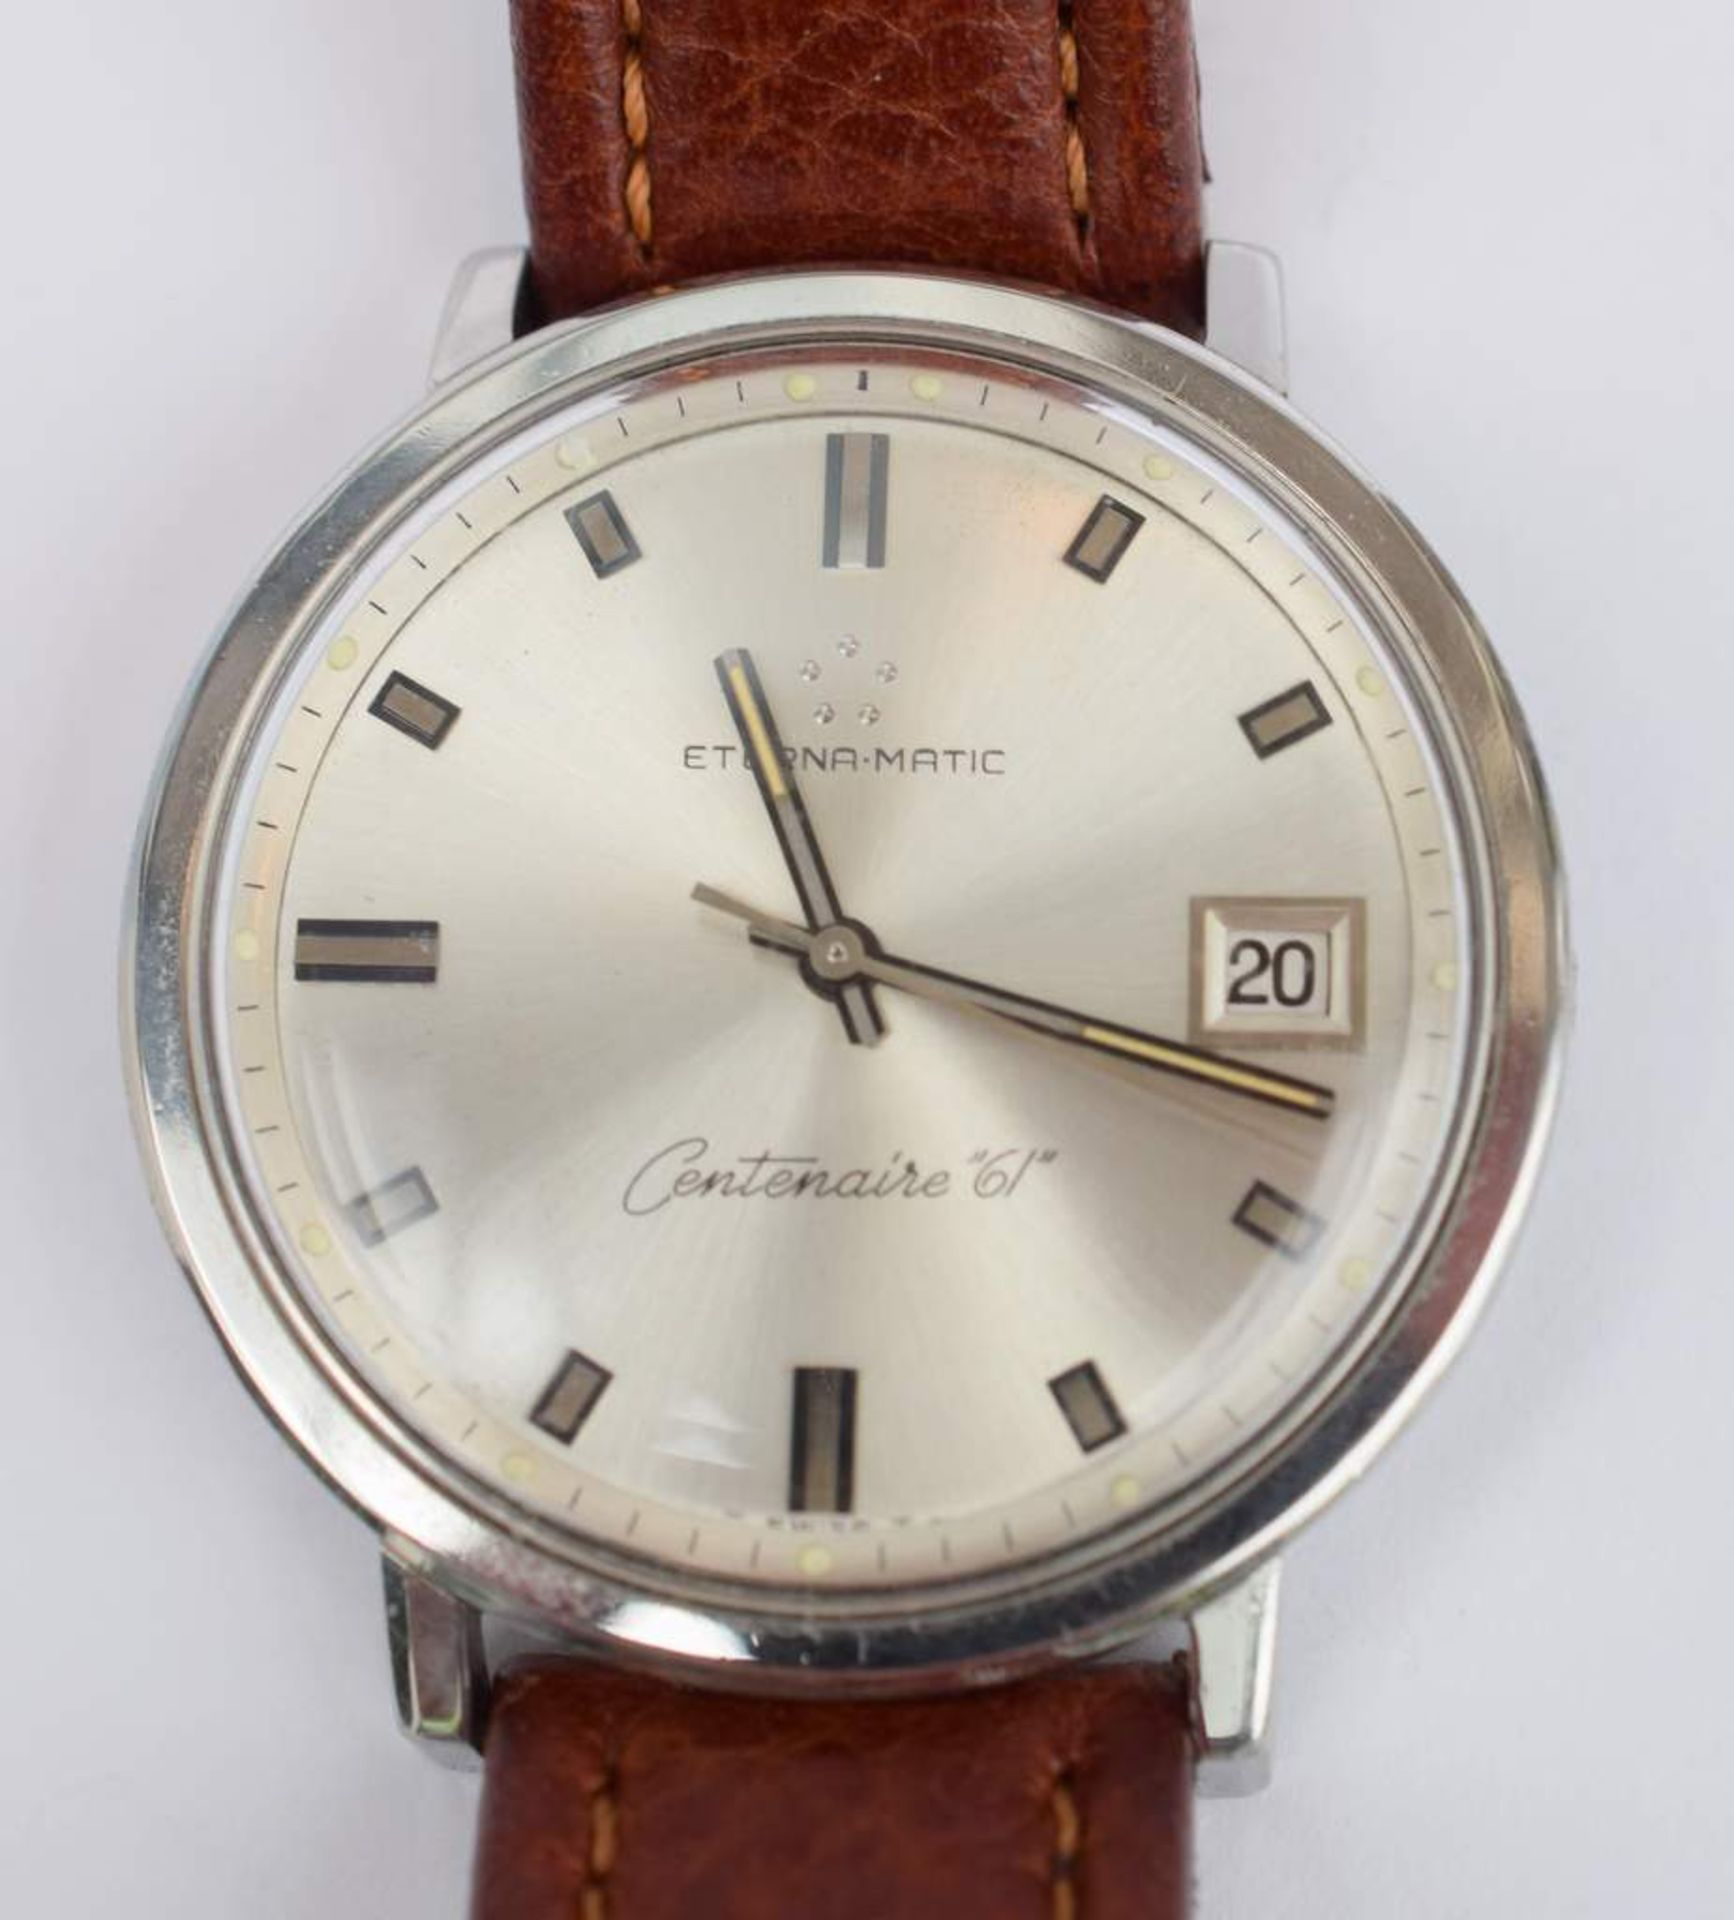 Eterna-Matic Centenaire 61 Gentleman's Automatic Wristwatch - Image 3 of 7